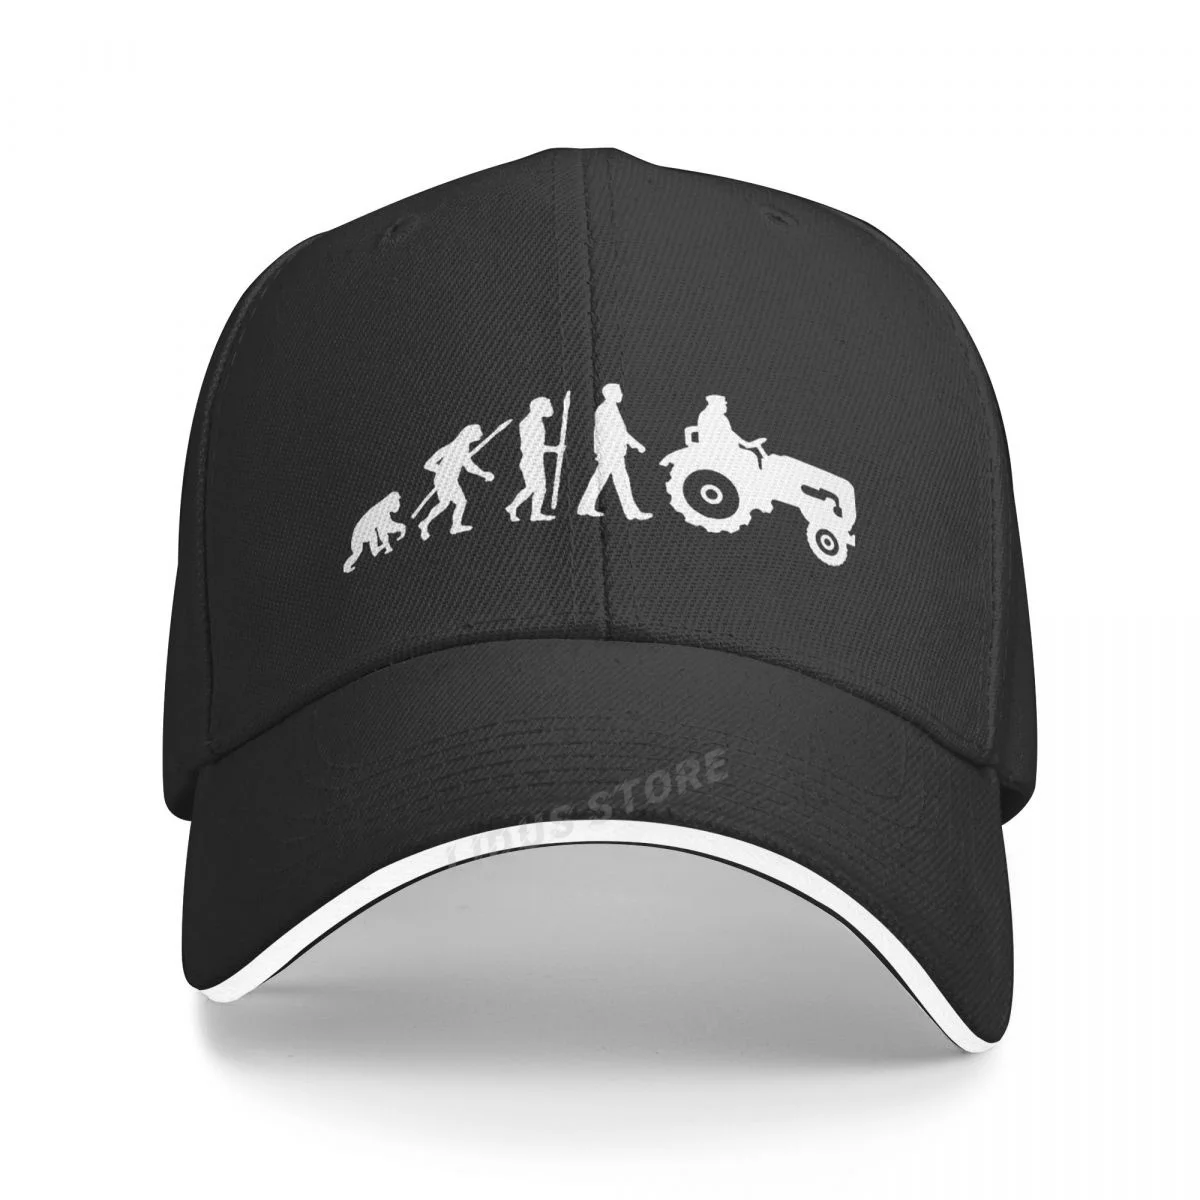 Evolution Of Tractor Baseball Caps Men Fashion Cool Cotton Adjustable Summer Outdoor Farmer Hats